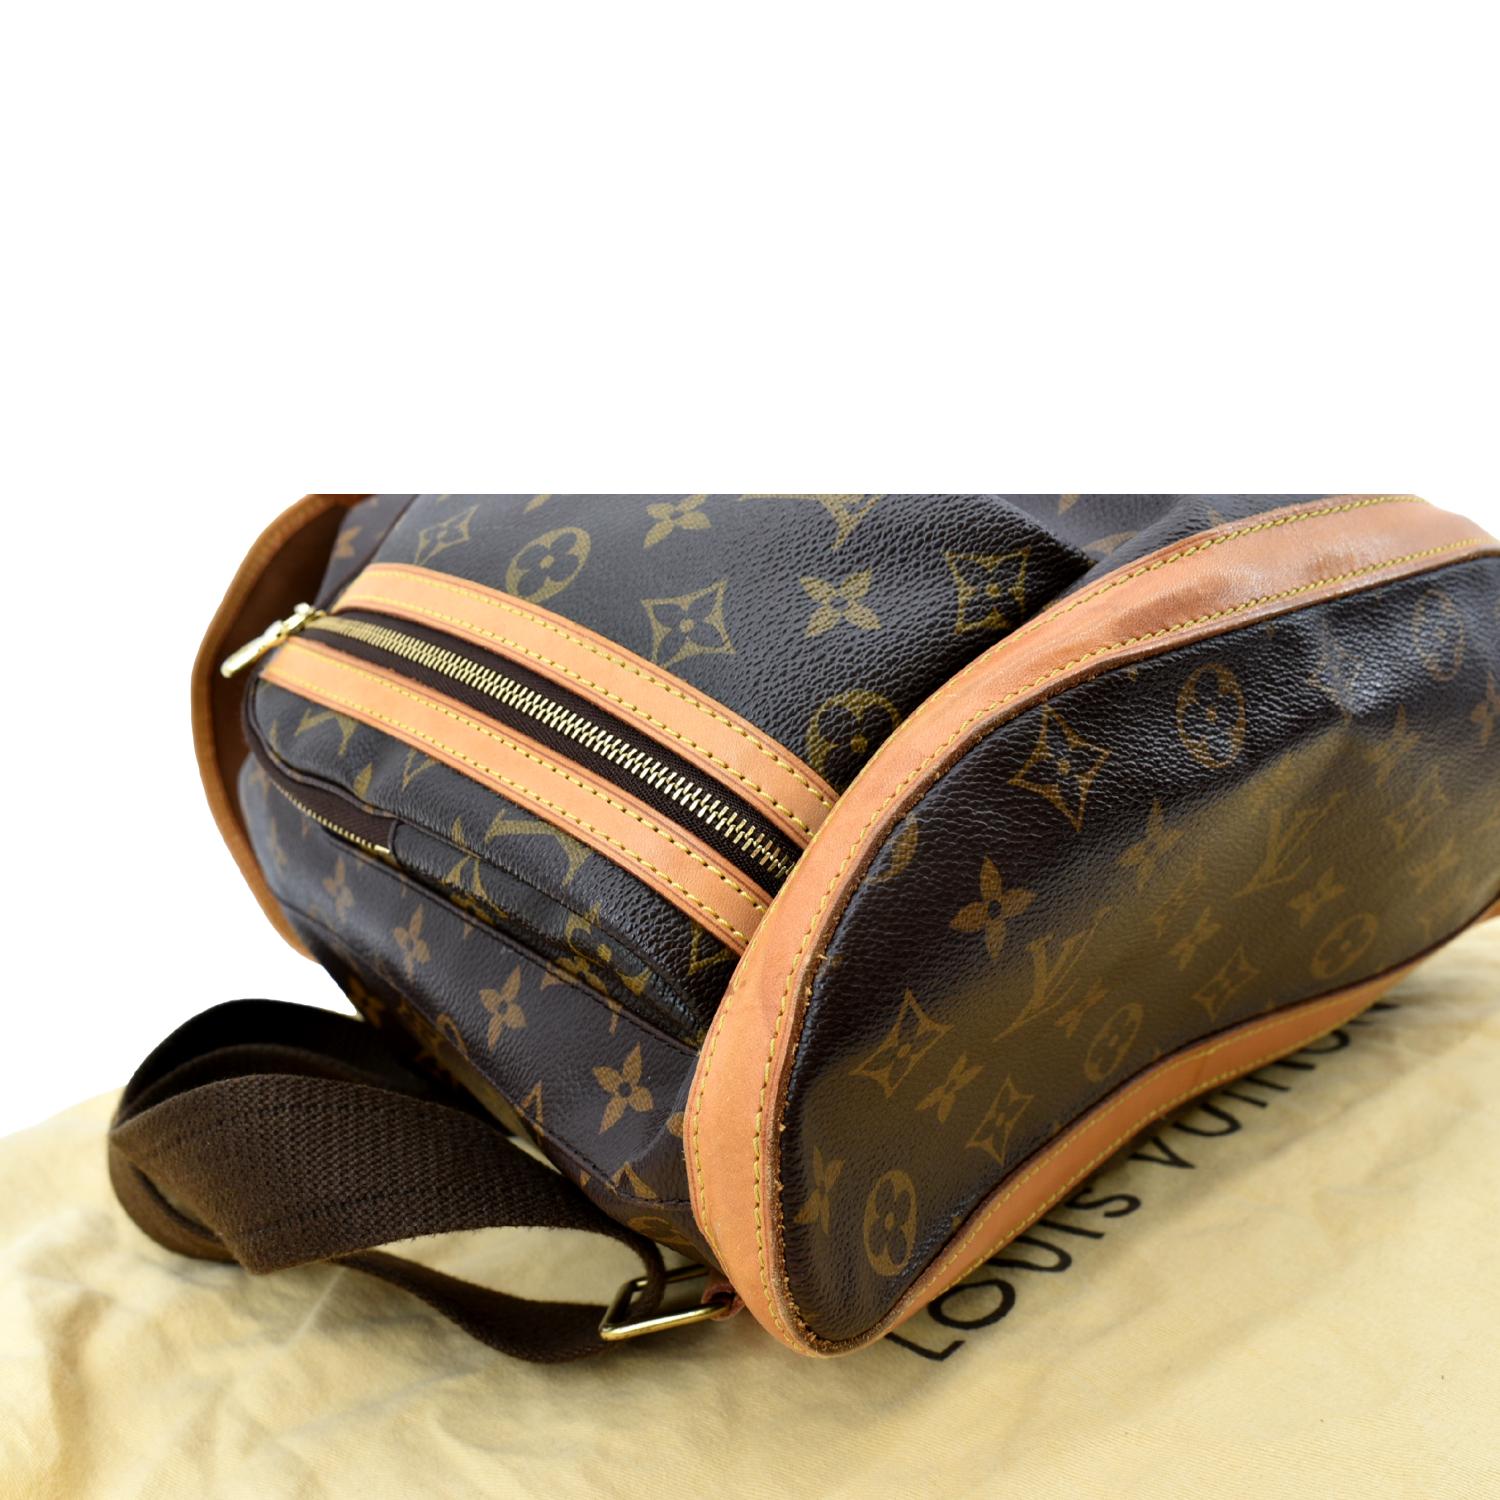 Louis Vuitton Monogram Backpack on SALE